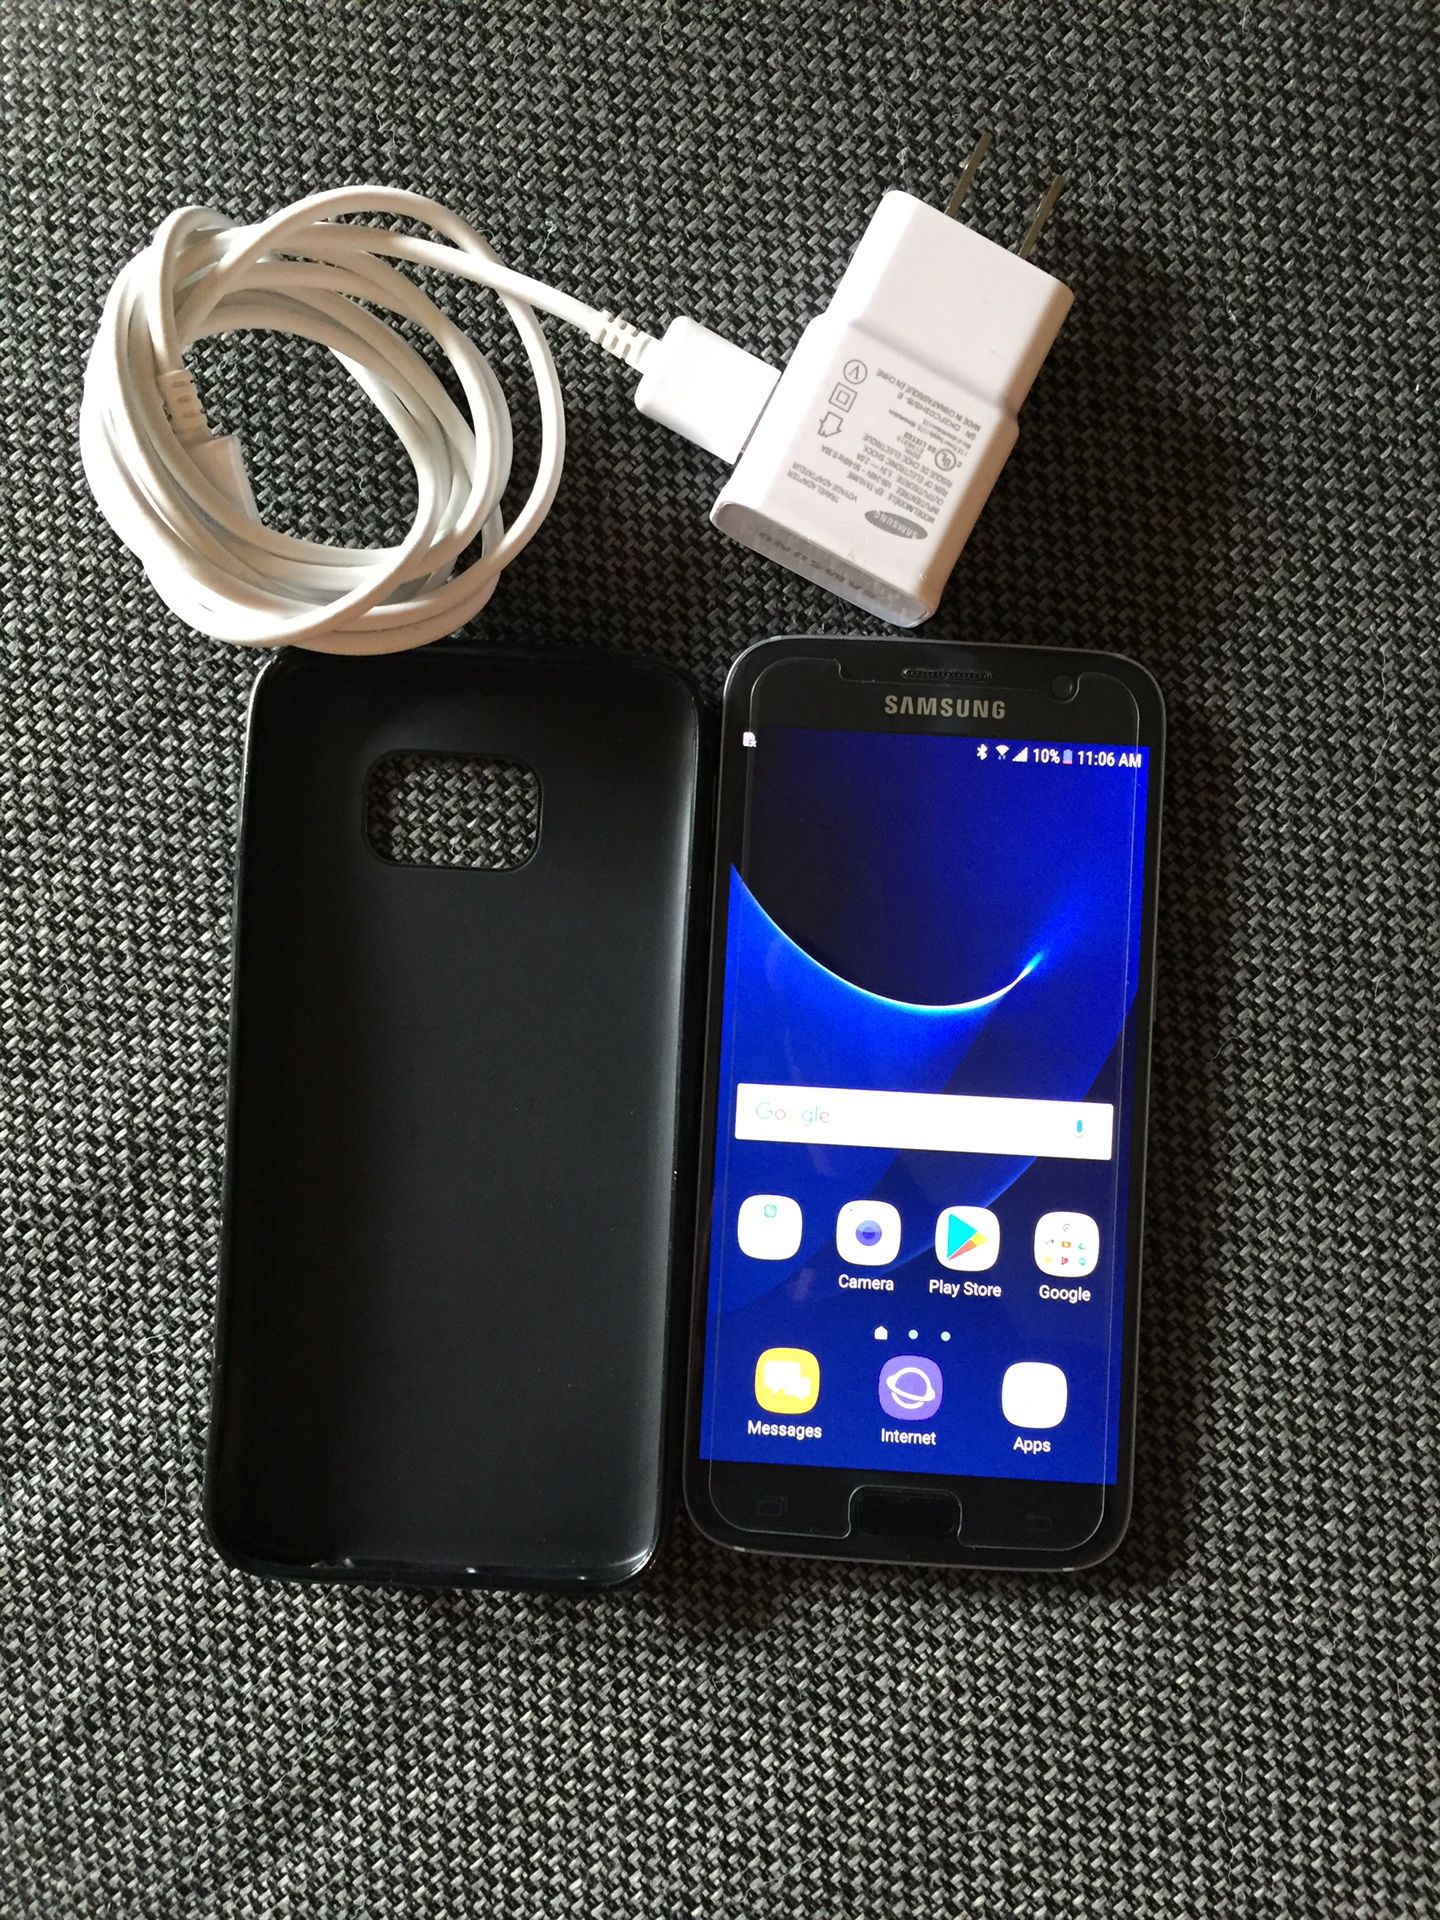 Samsung galaxy s7-32gb factory unlocked